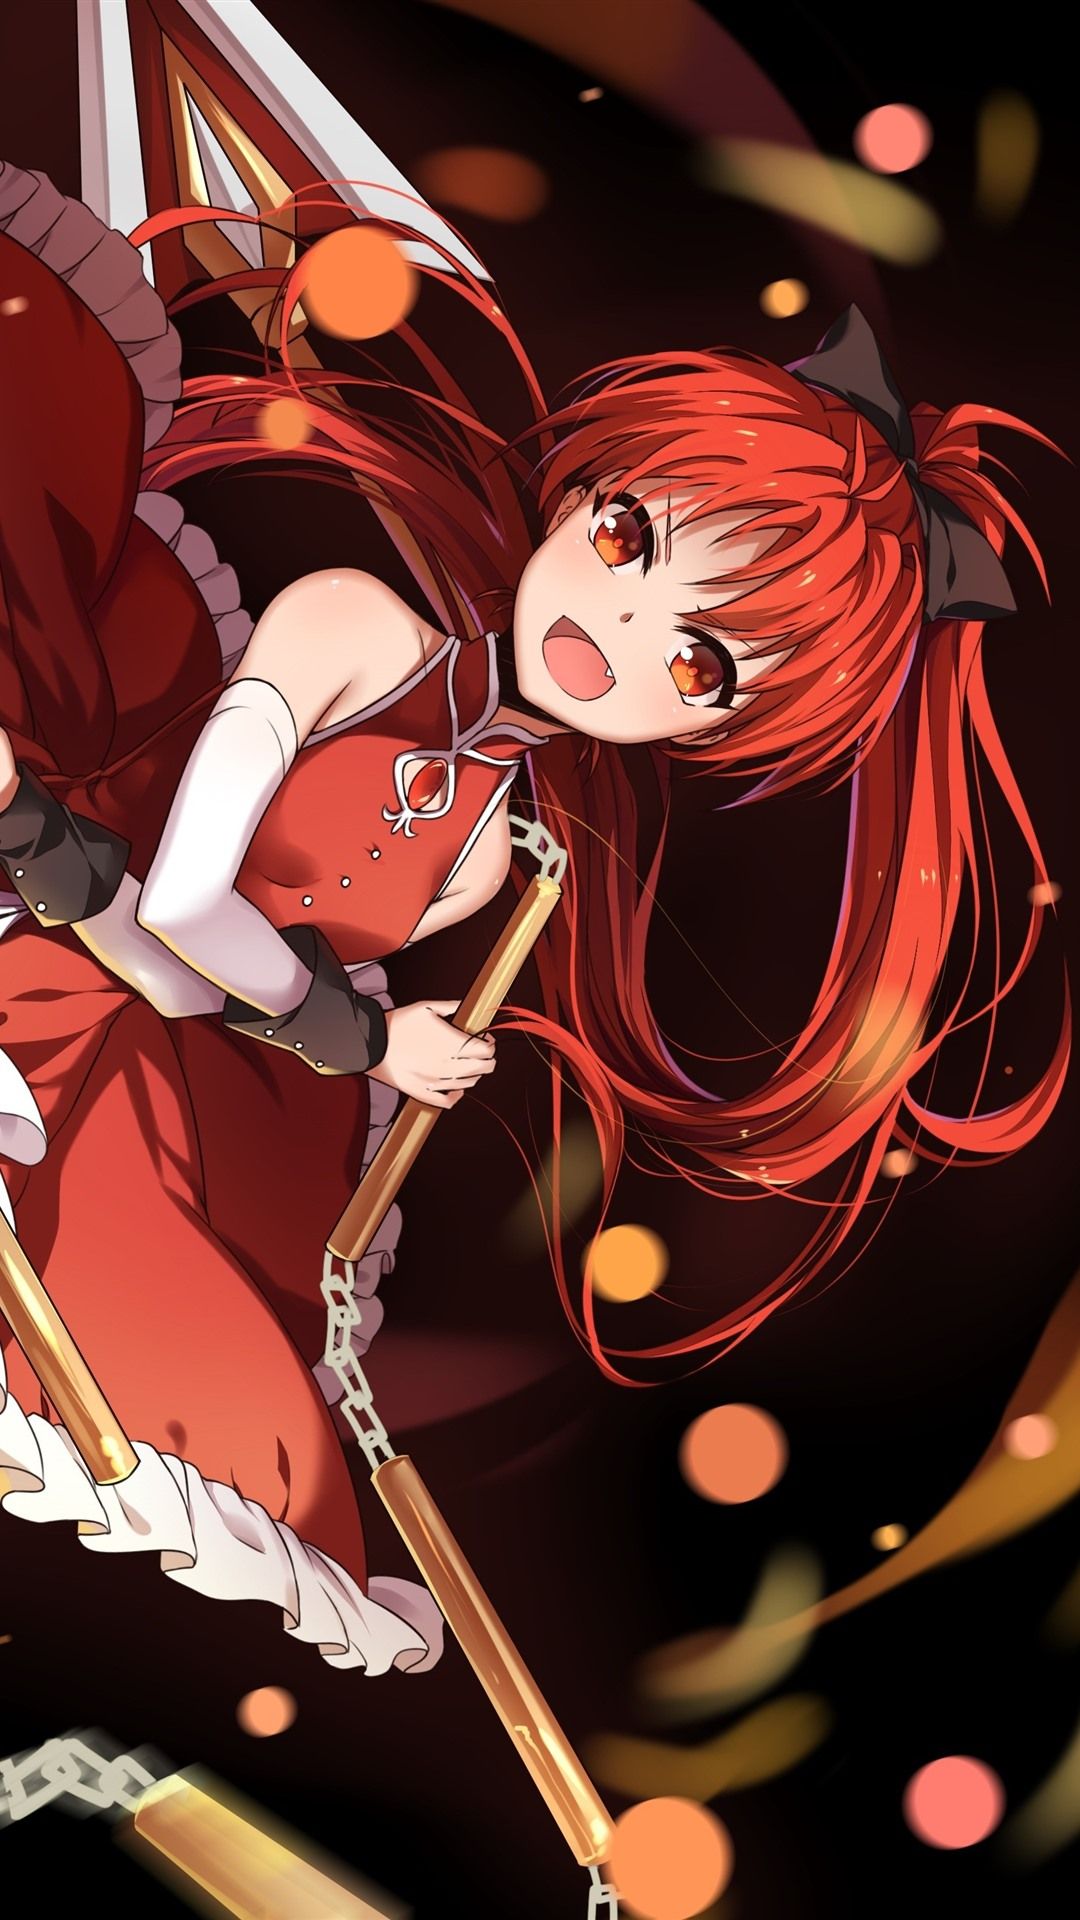 Wallpaper Red hair anime girl, nunchaku 3840x2160 UHD 4K Picture, Image